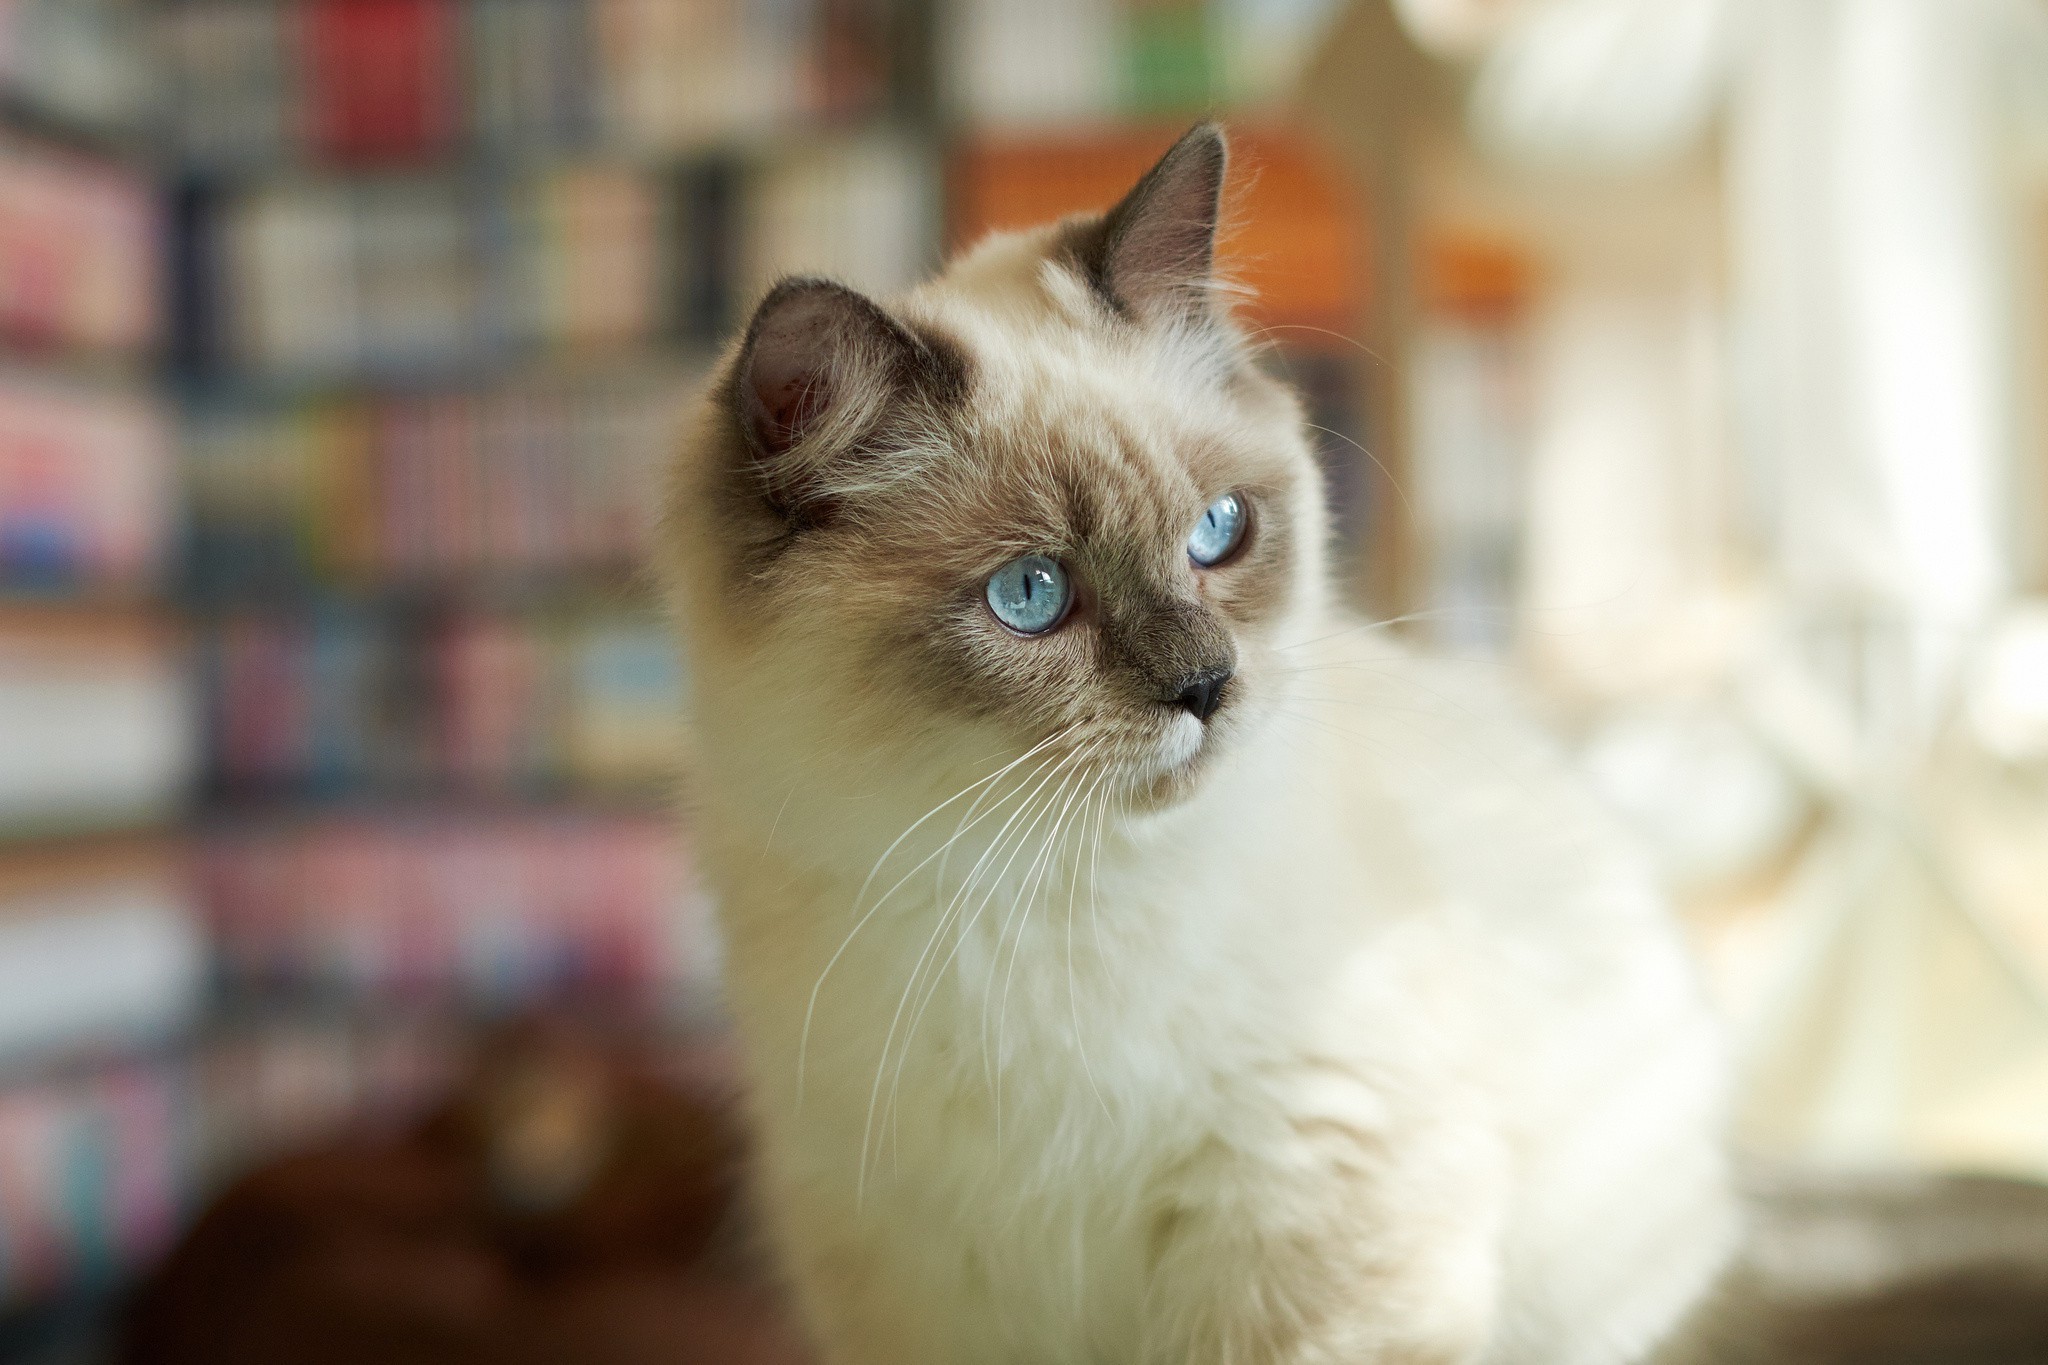 General 2048x1365 cats animals Siamese cats blue eyes blurred indoors animal eyes mammals feline closeup